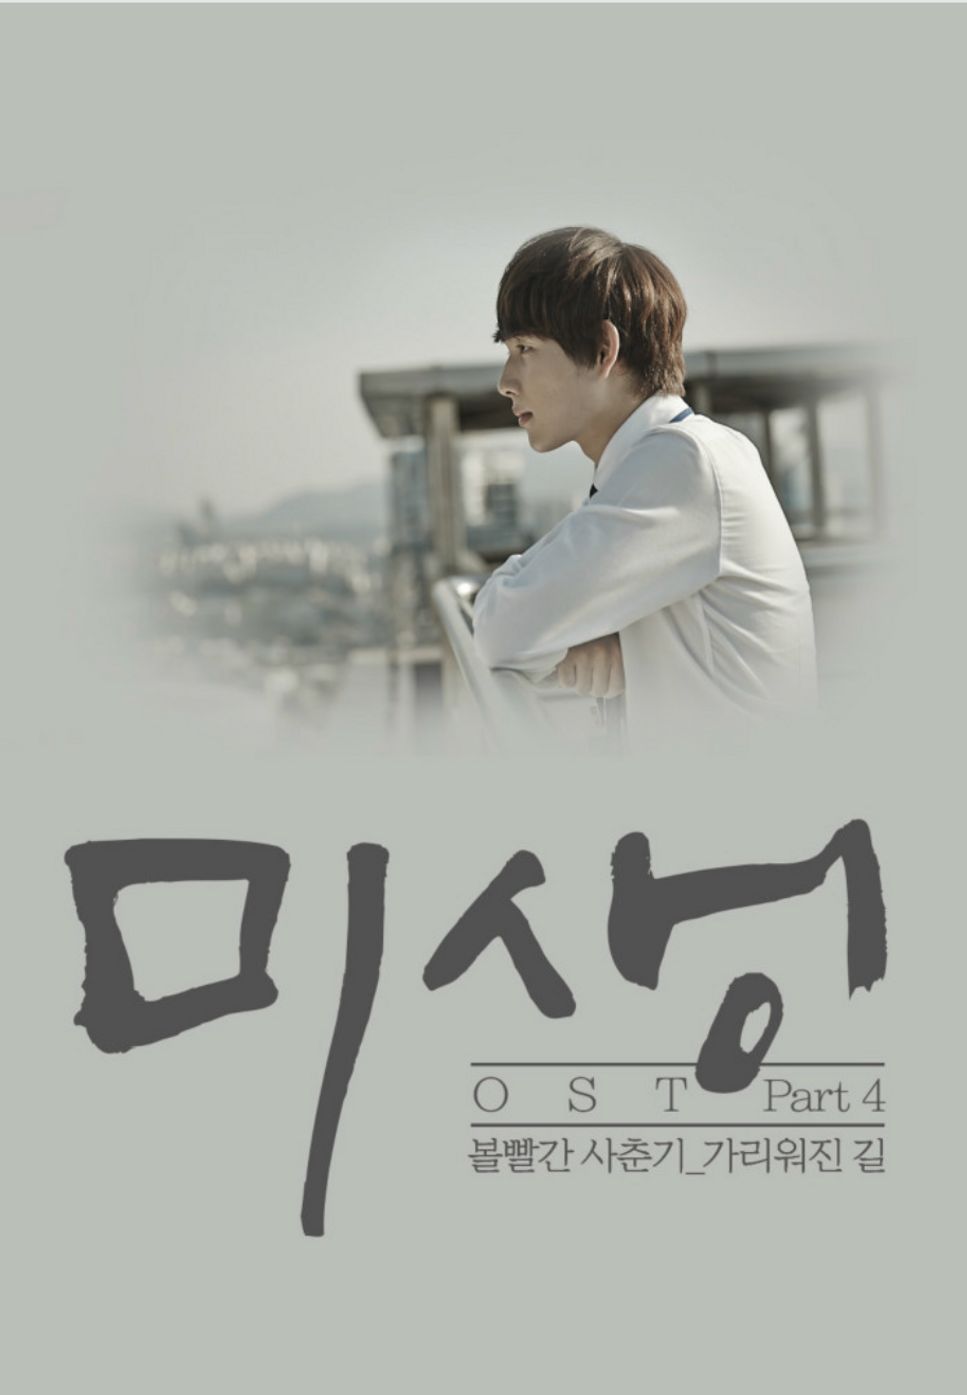 BOL4(볼빨간사춘기) - The covered up Road(가리워진 길) (Misaeng(미생) OST) by PIANOSUMM